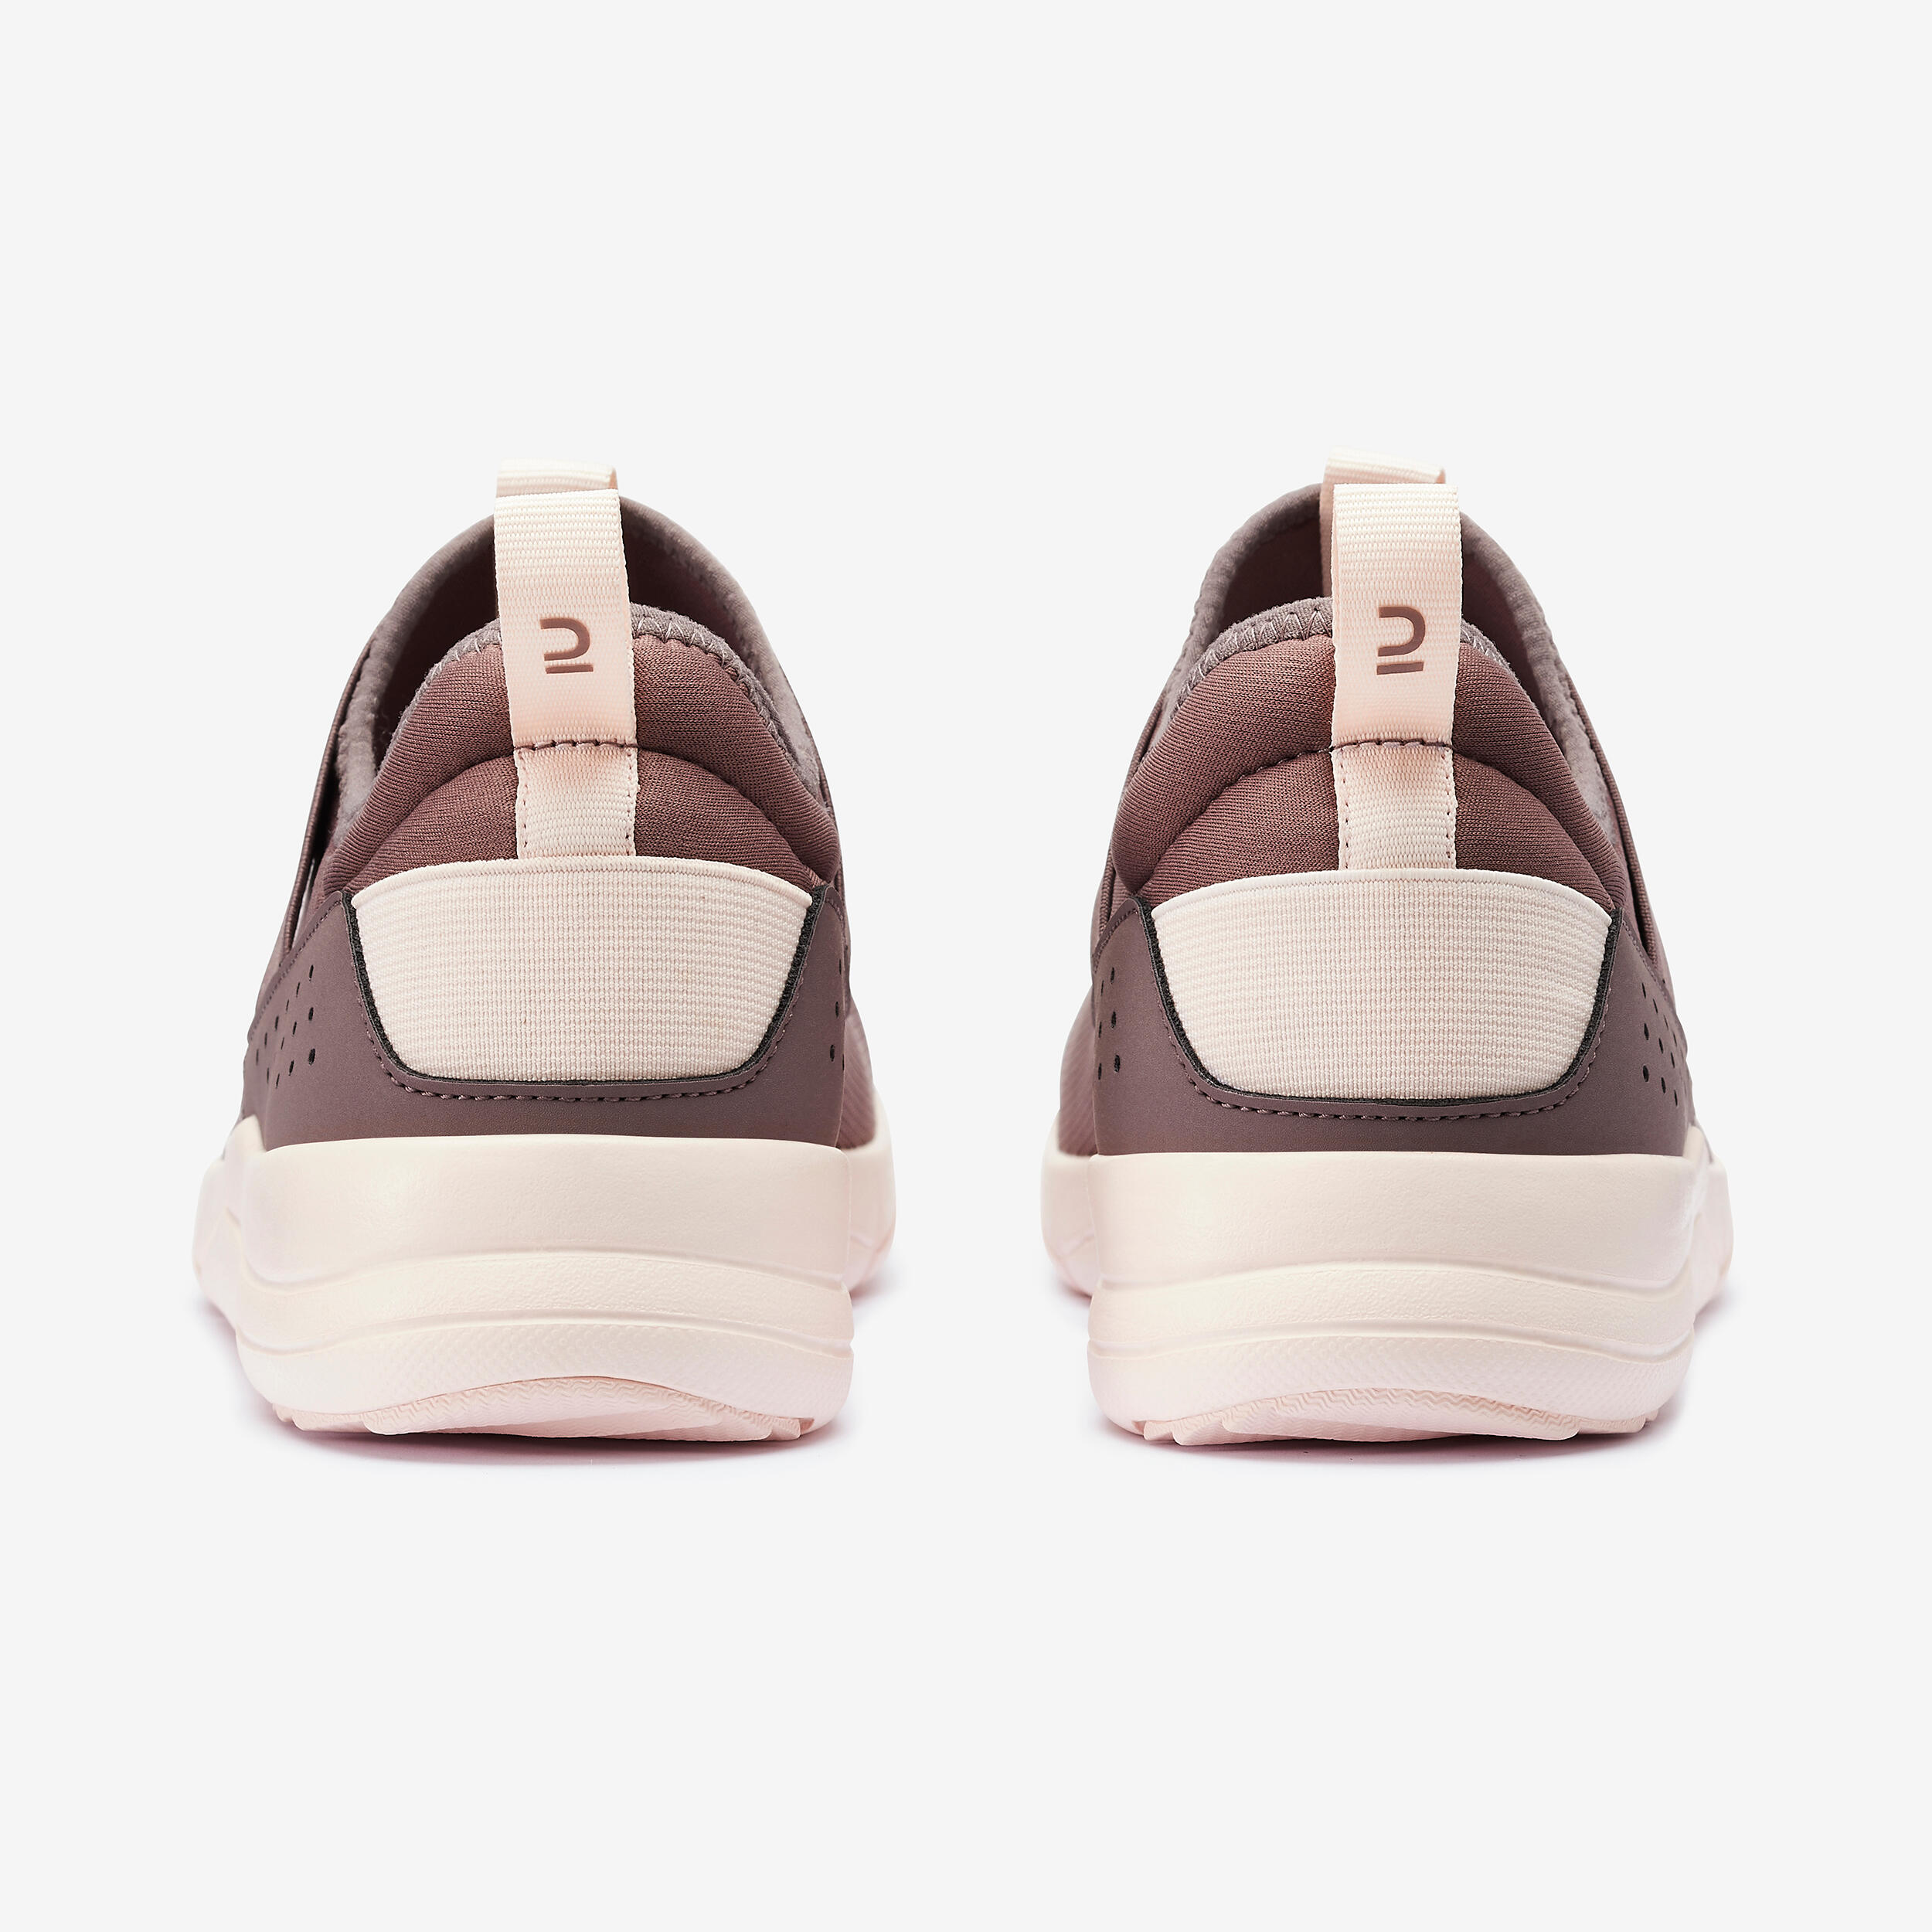 PW 160 Slip-On Women's Urban Walking Shoes-Purple Pink 6/7